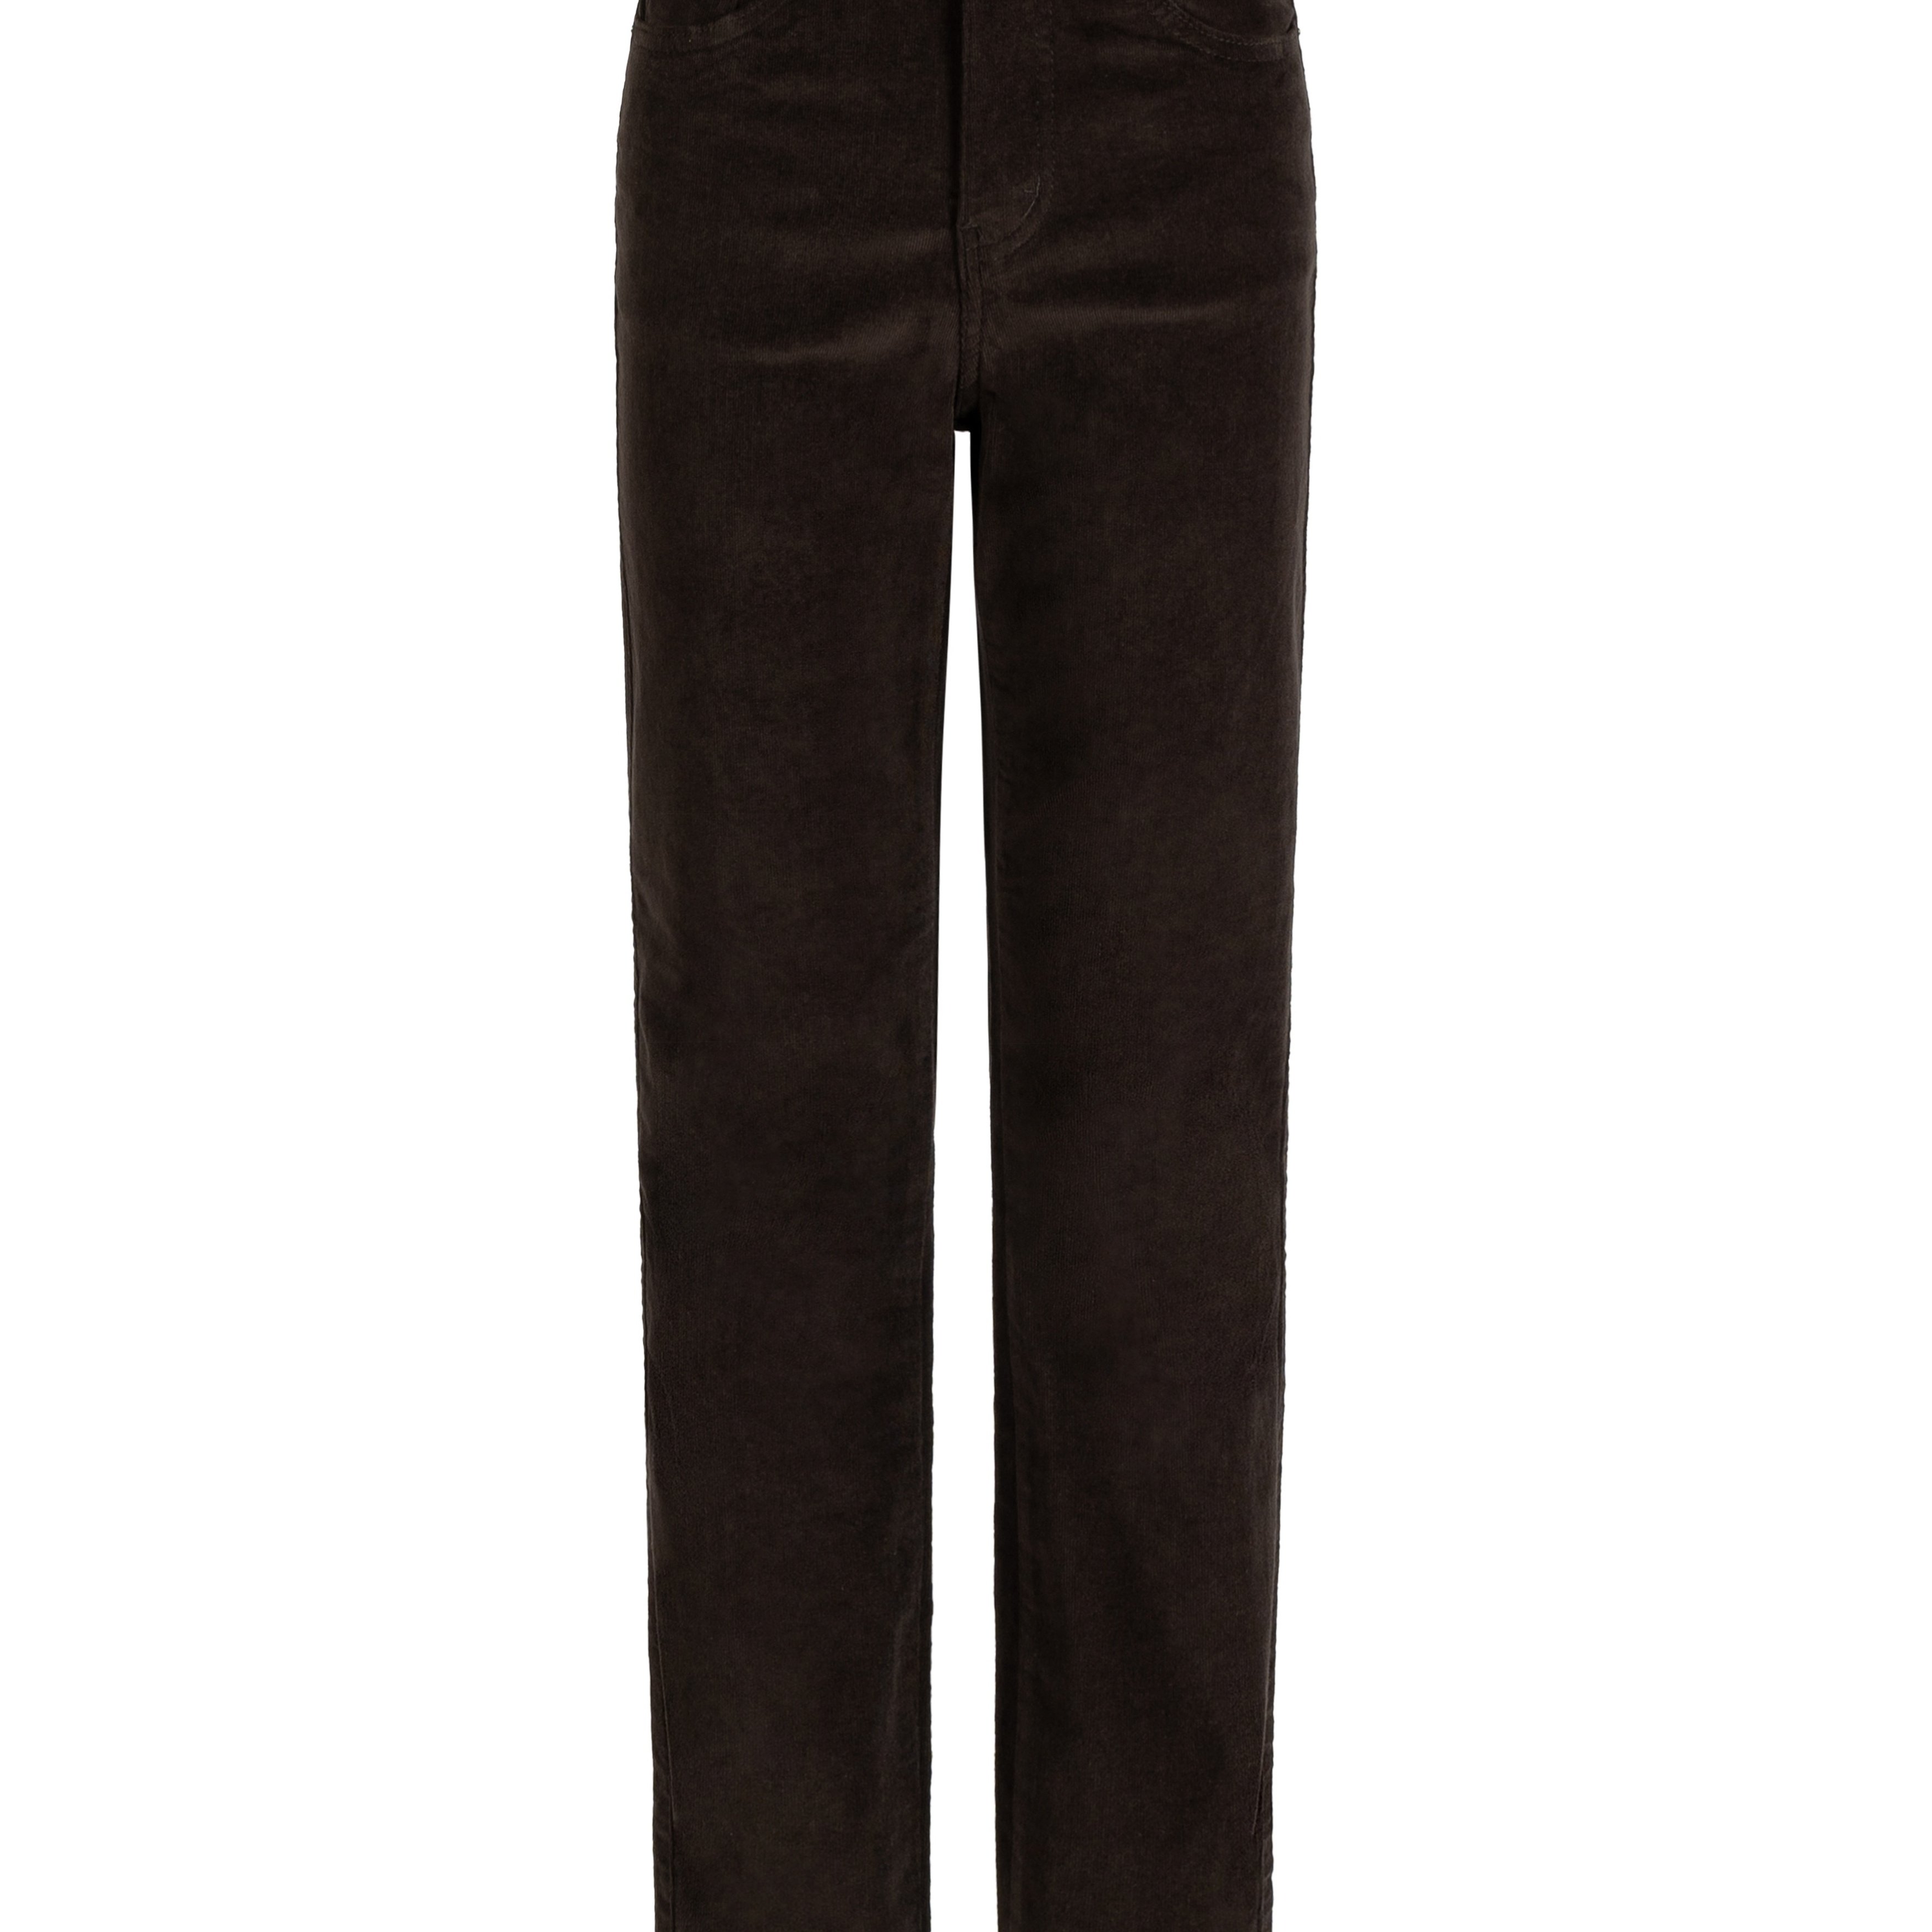 Corduroy Denim Bloomers Dark Brown High Waist Tapered Pants Rolled Jeans,  Women's Denim Jeans